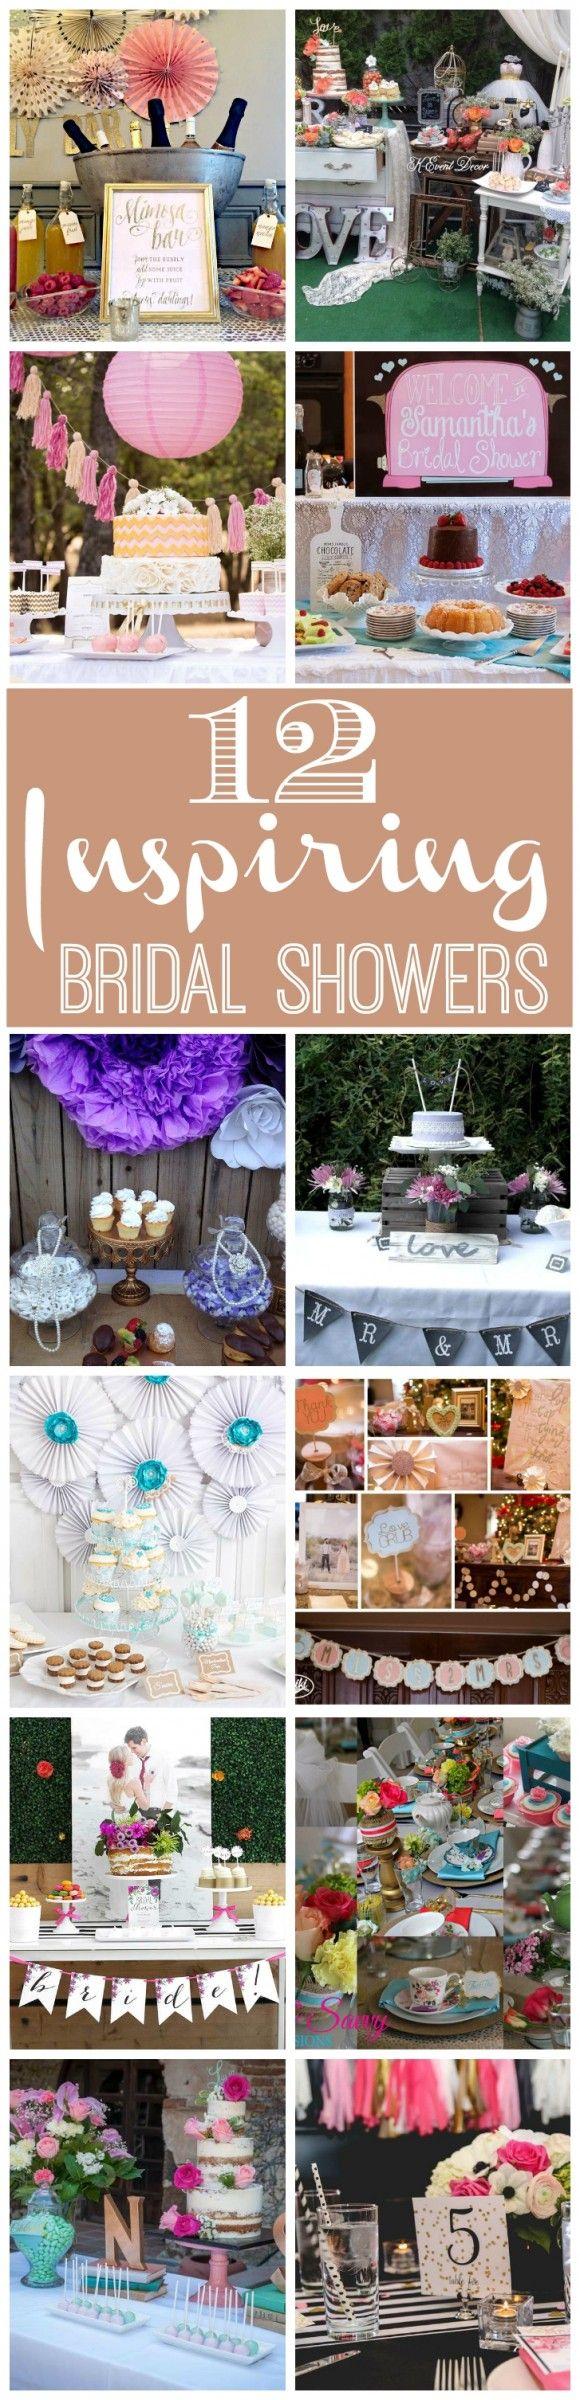 Свадьба - 12 Inspiring Bridal Showers